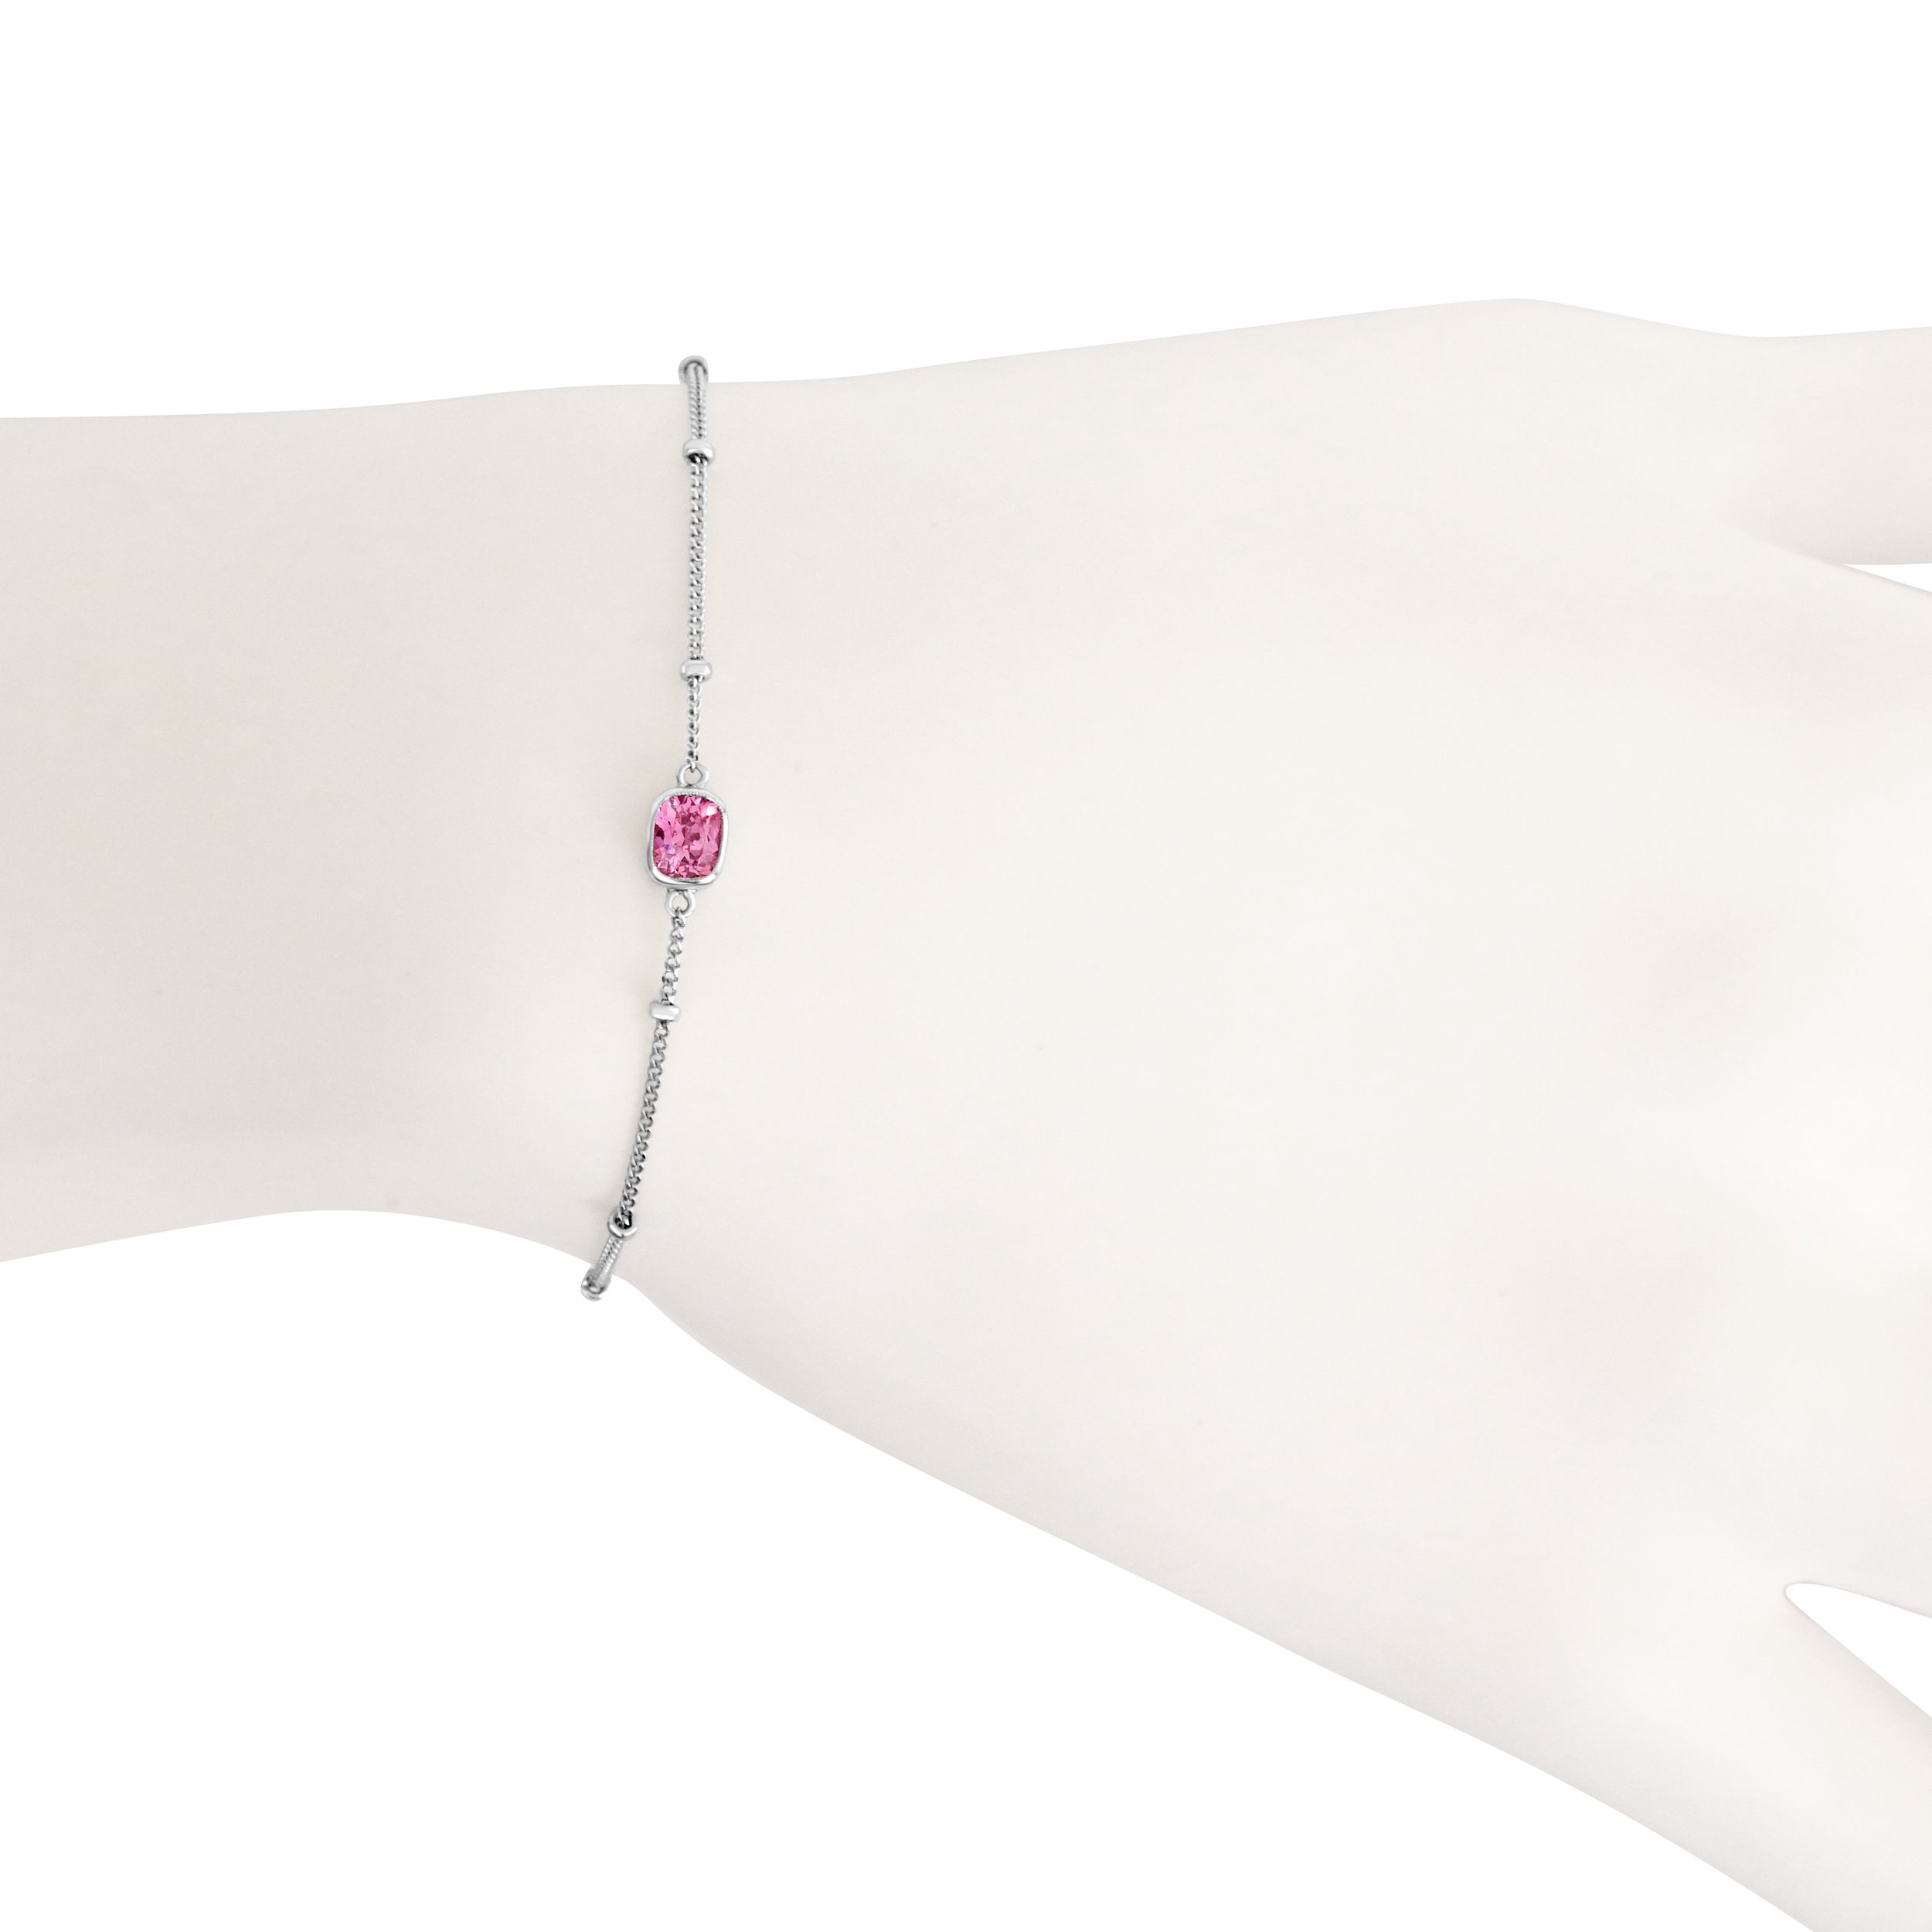 C 0.54 ct Pink Sapphire Bracelet.jpg